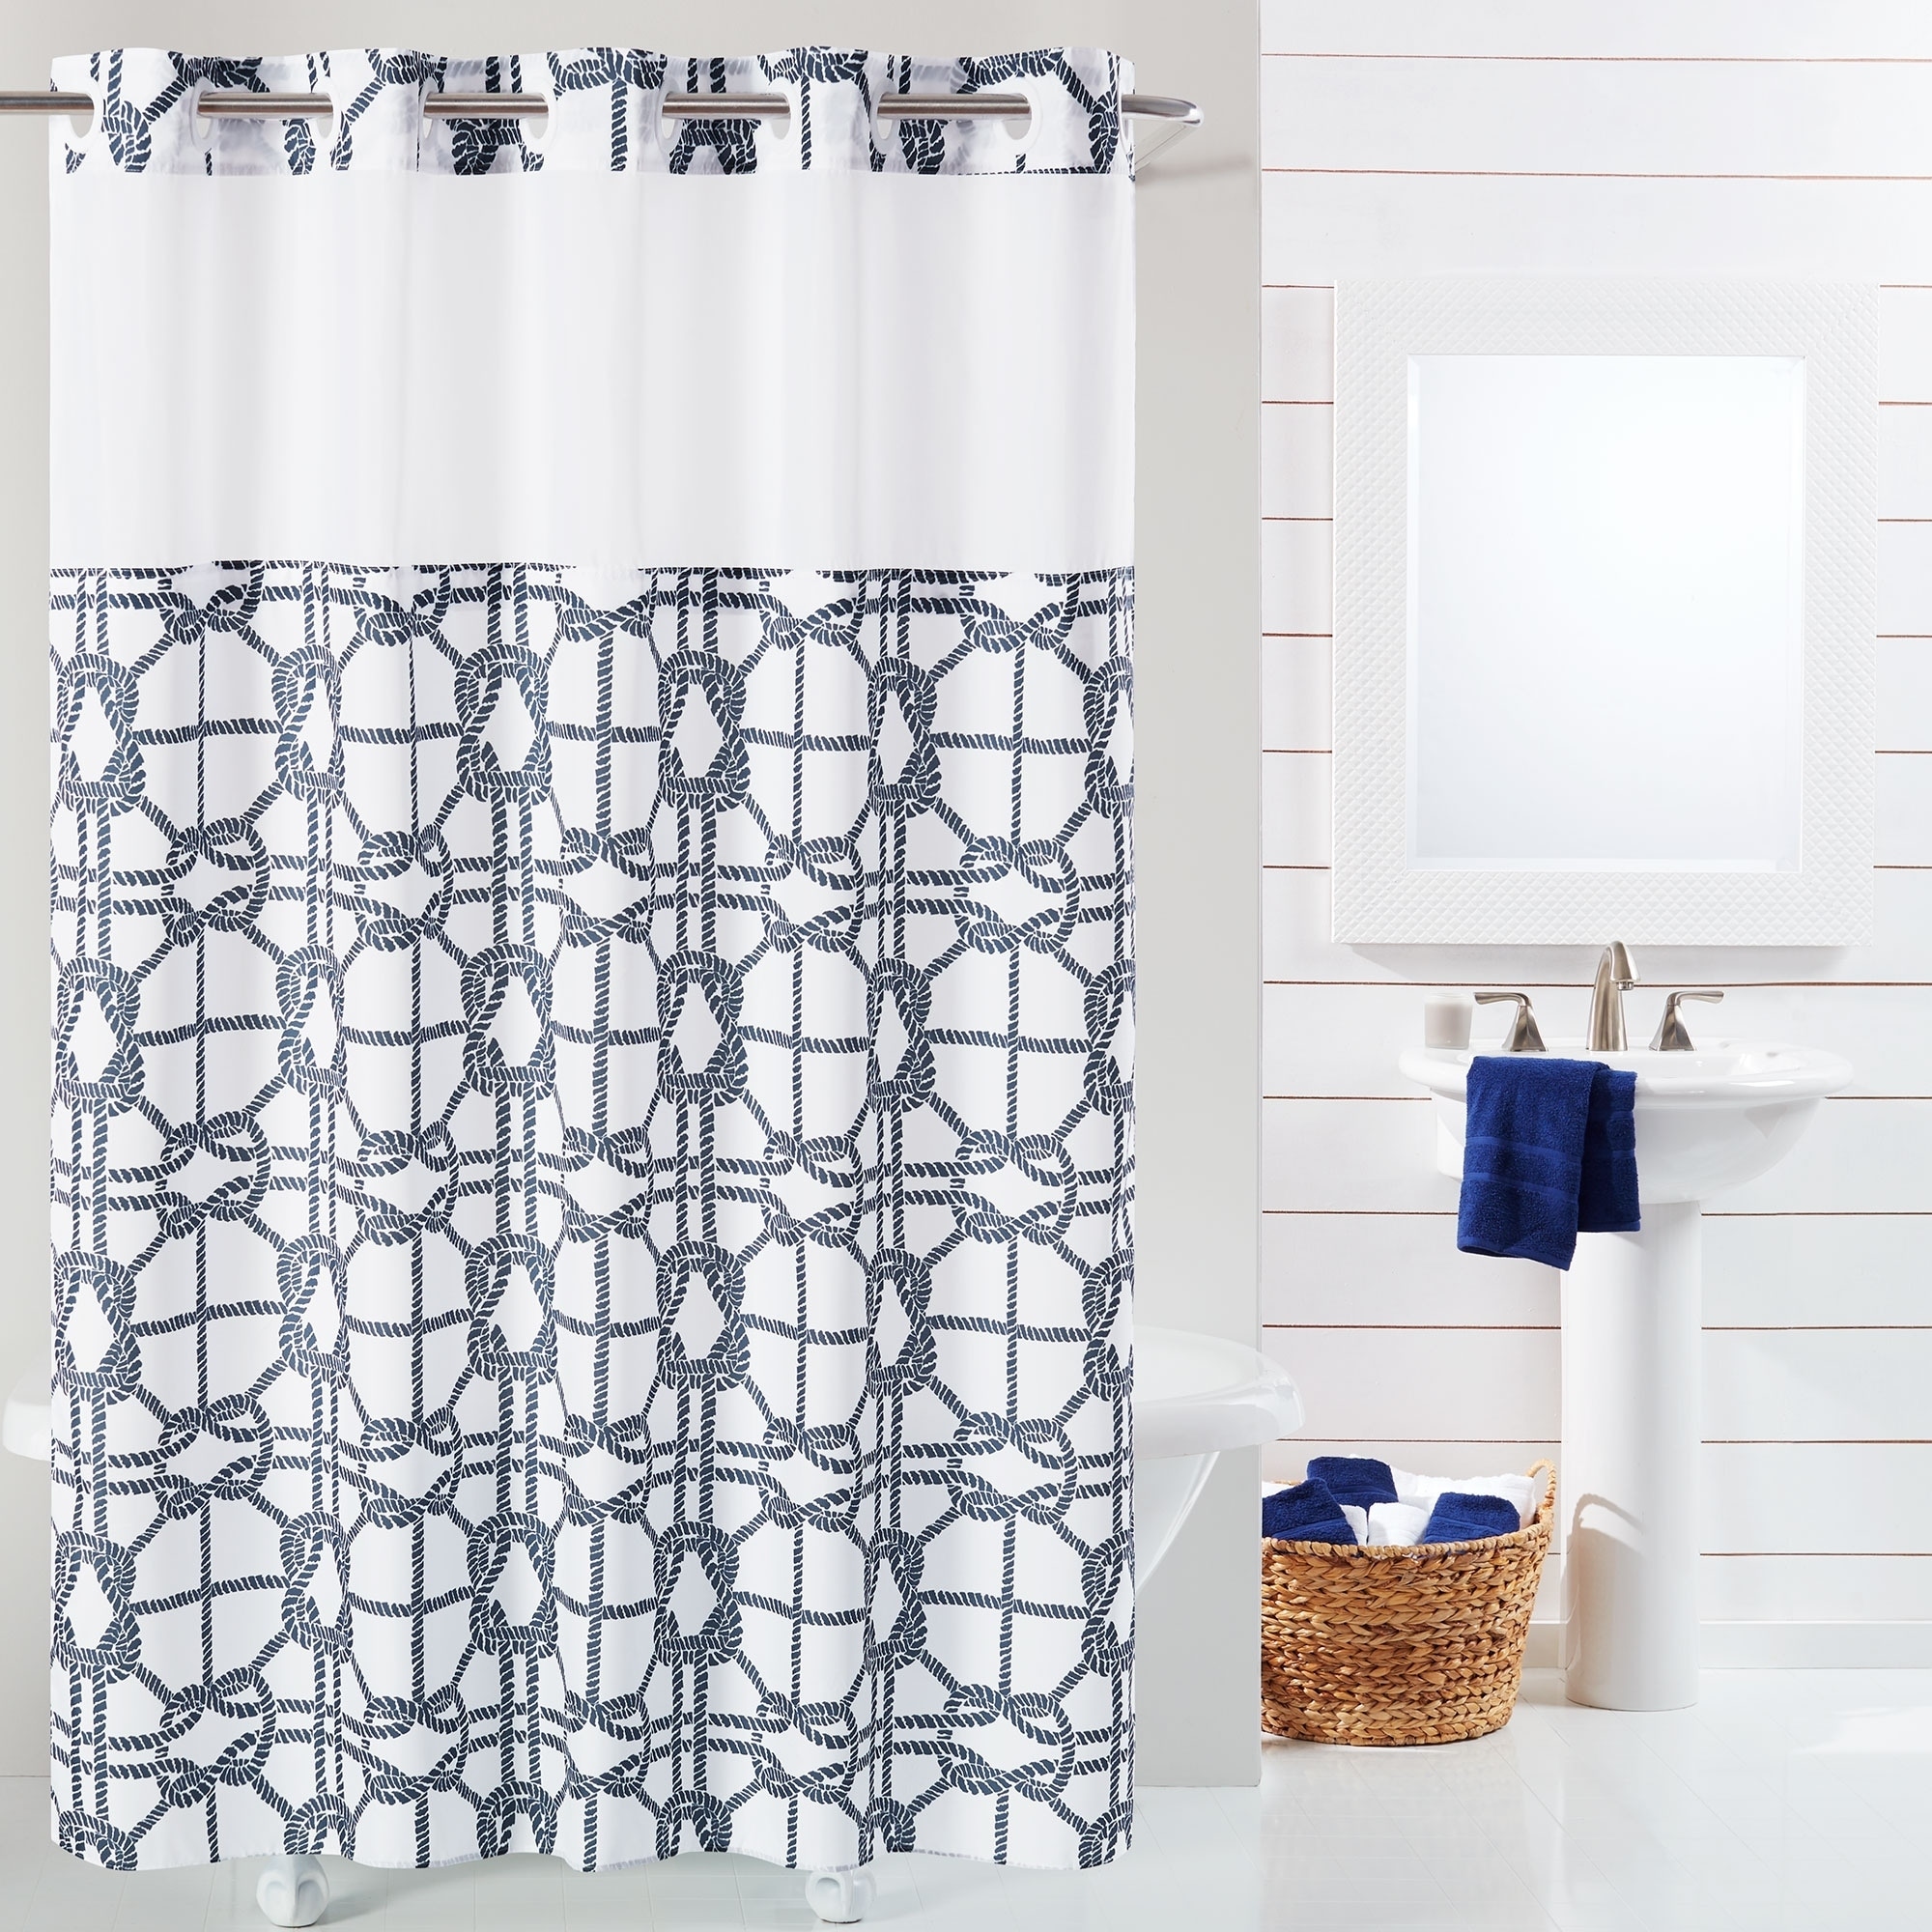 navy blue shower curtain liner